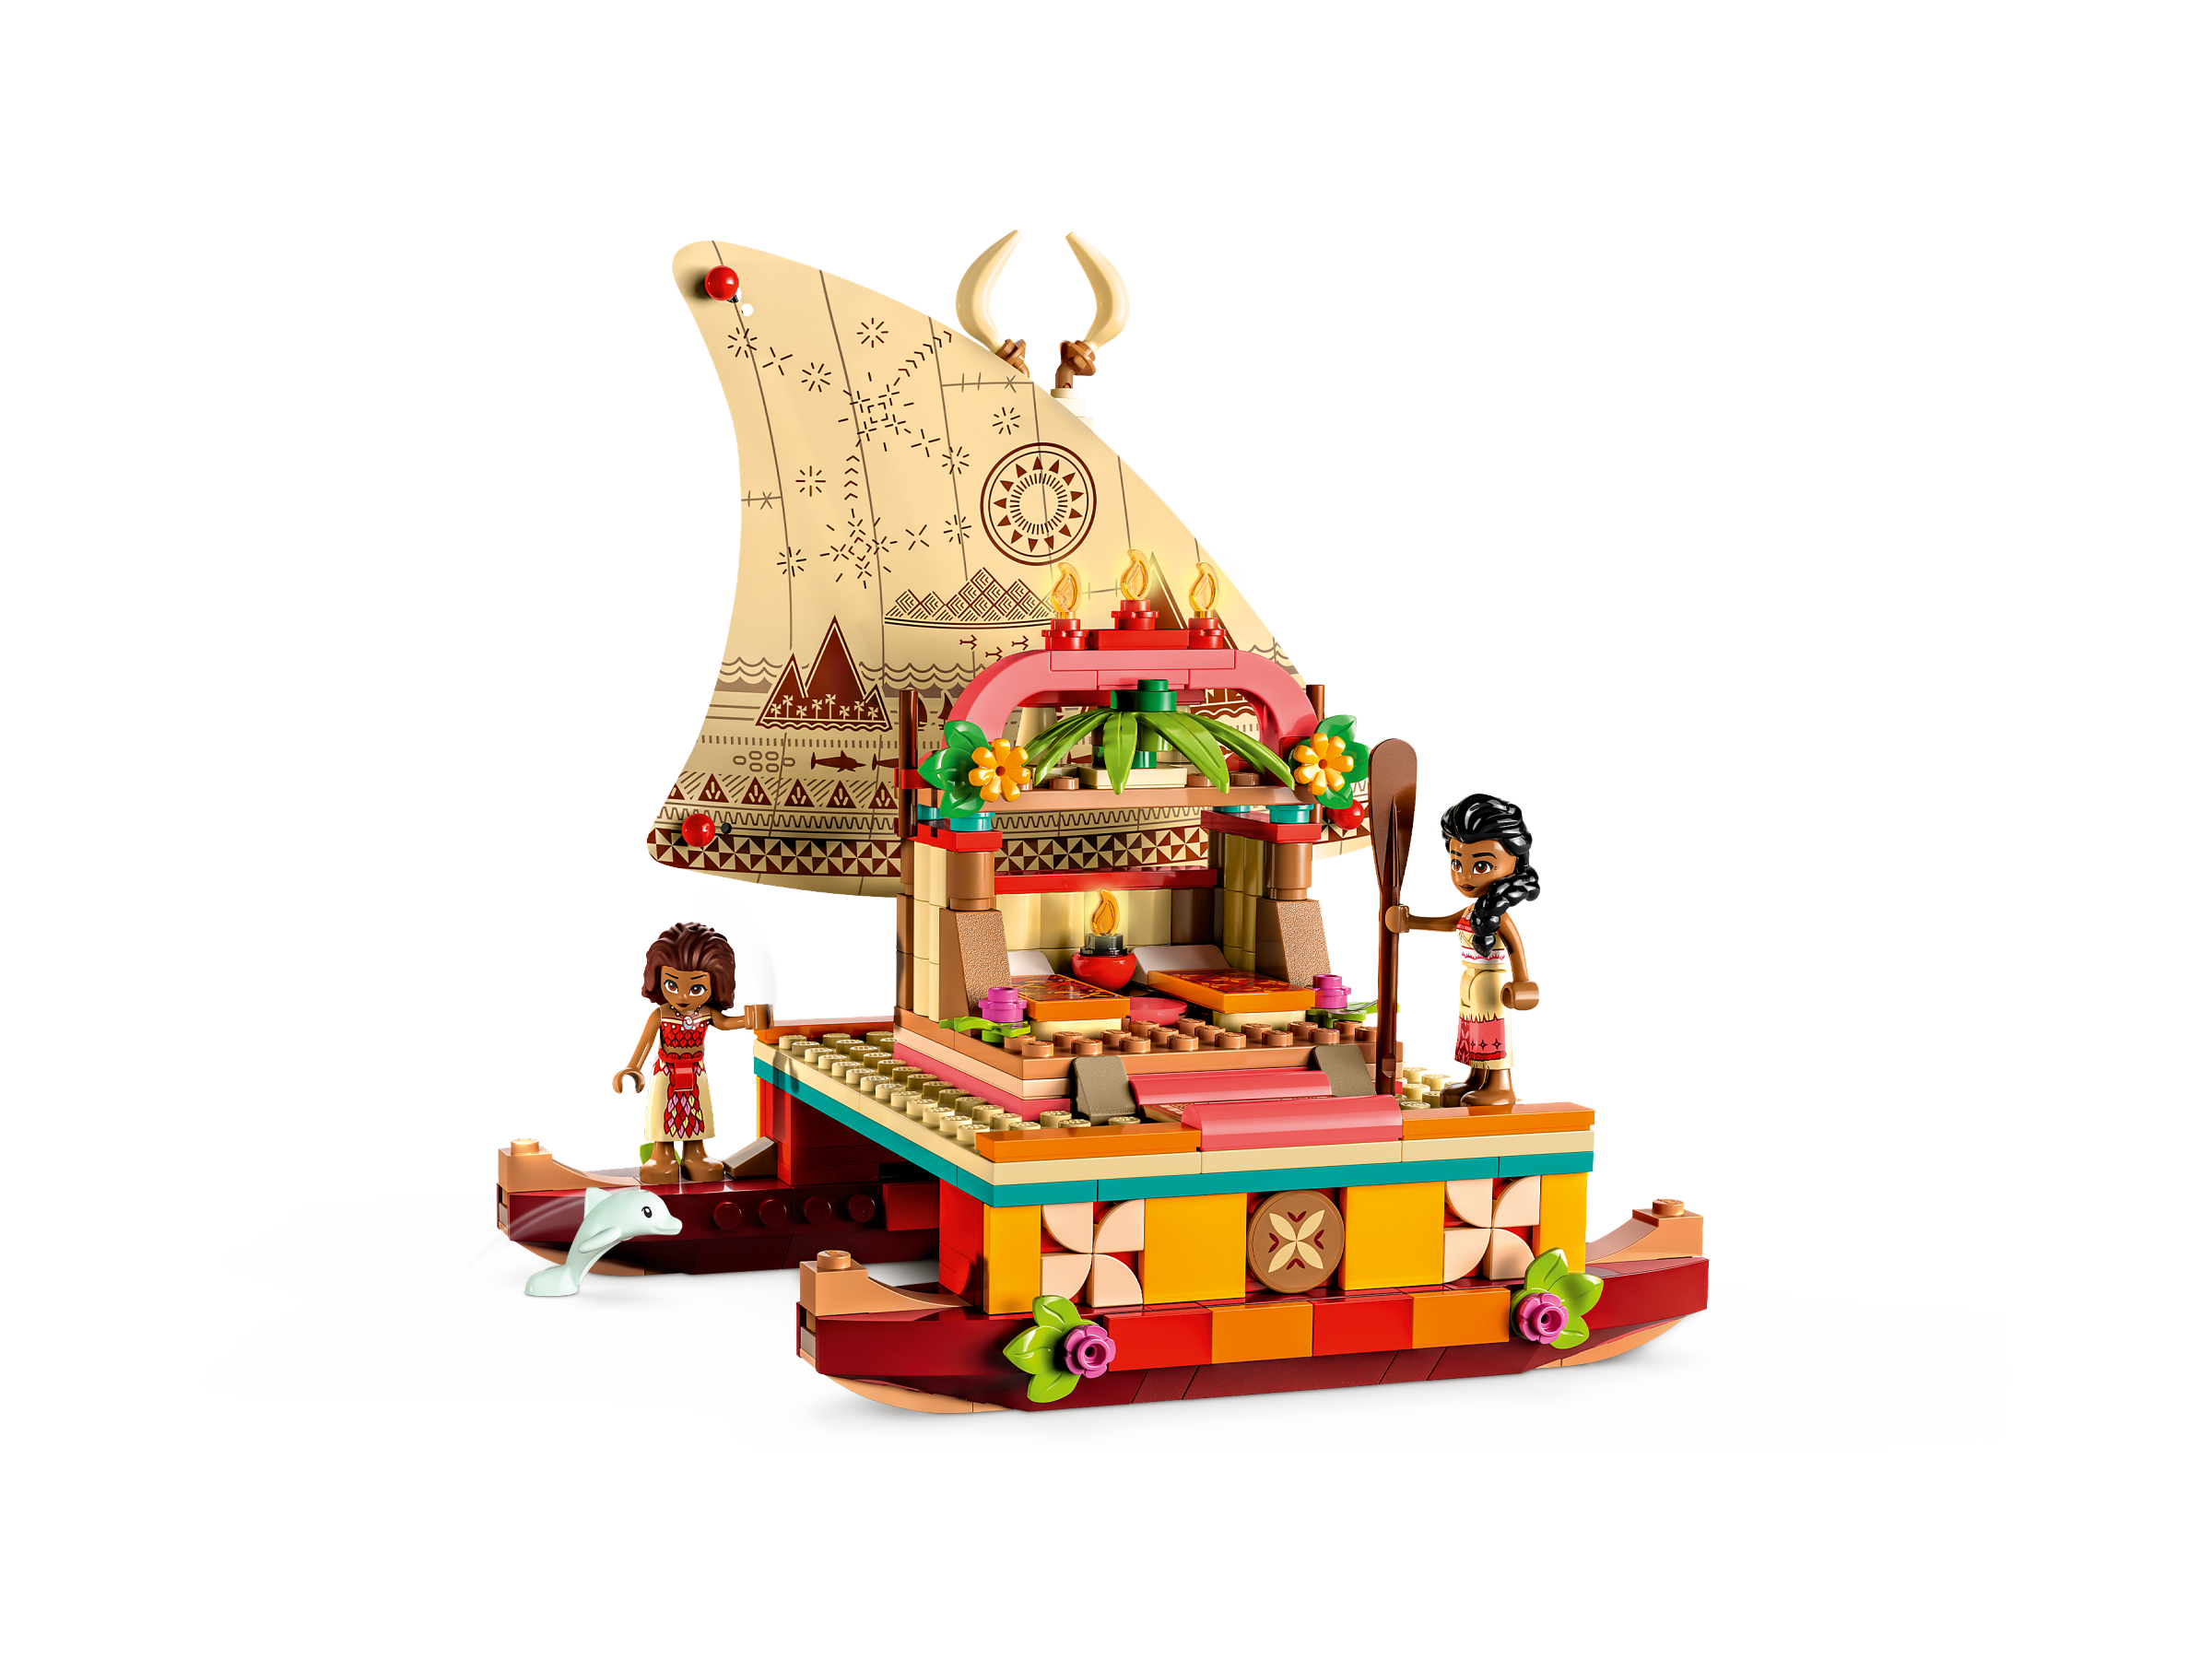 LEGO 43210 Le bateau d'exploration de Vaiana